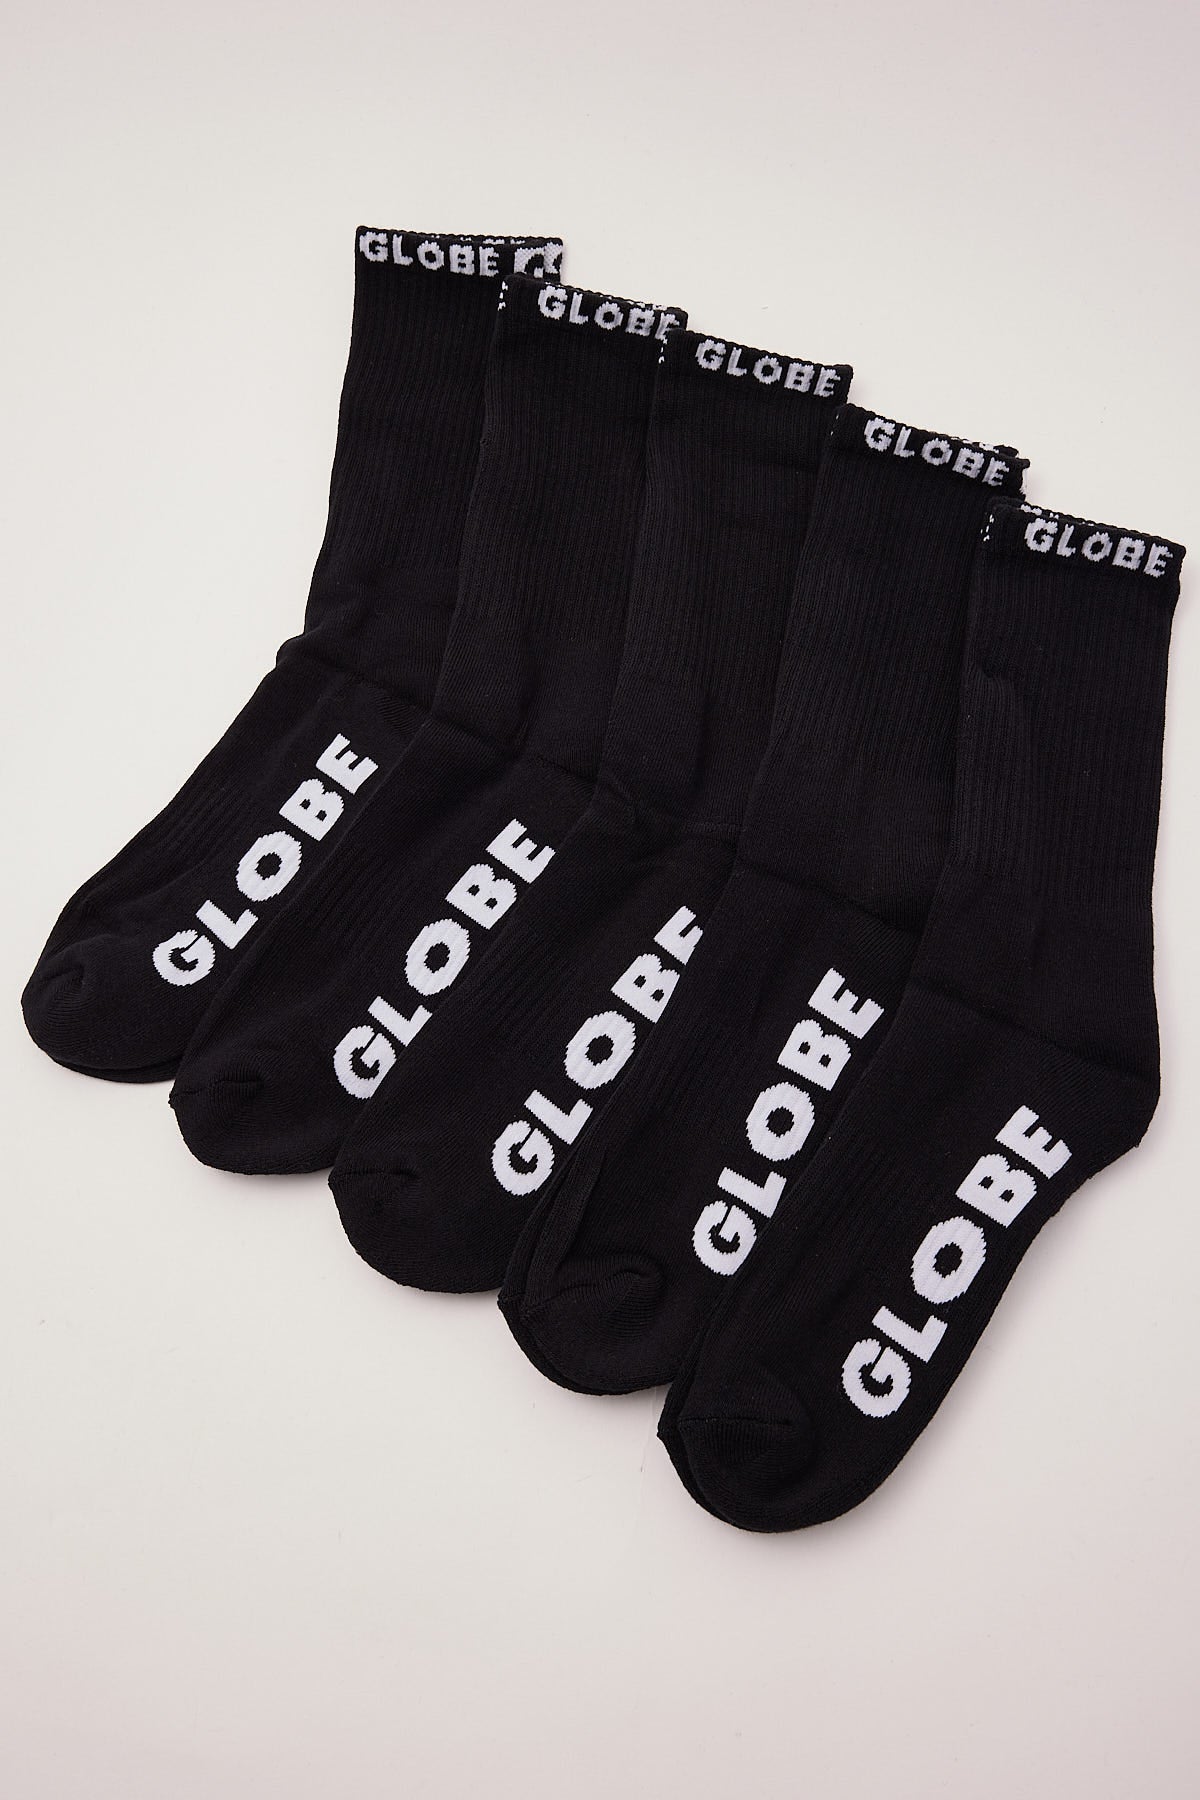 Globe Blackout Crew Sock 5pk Black